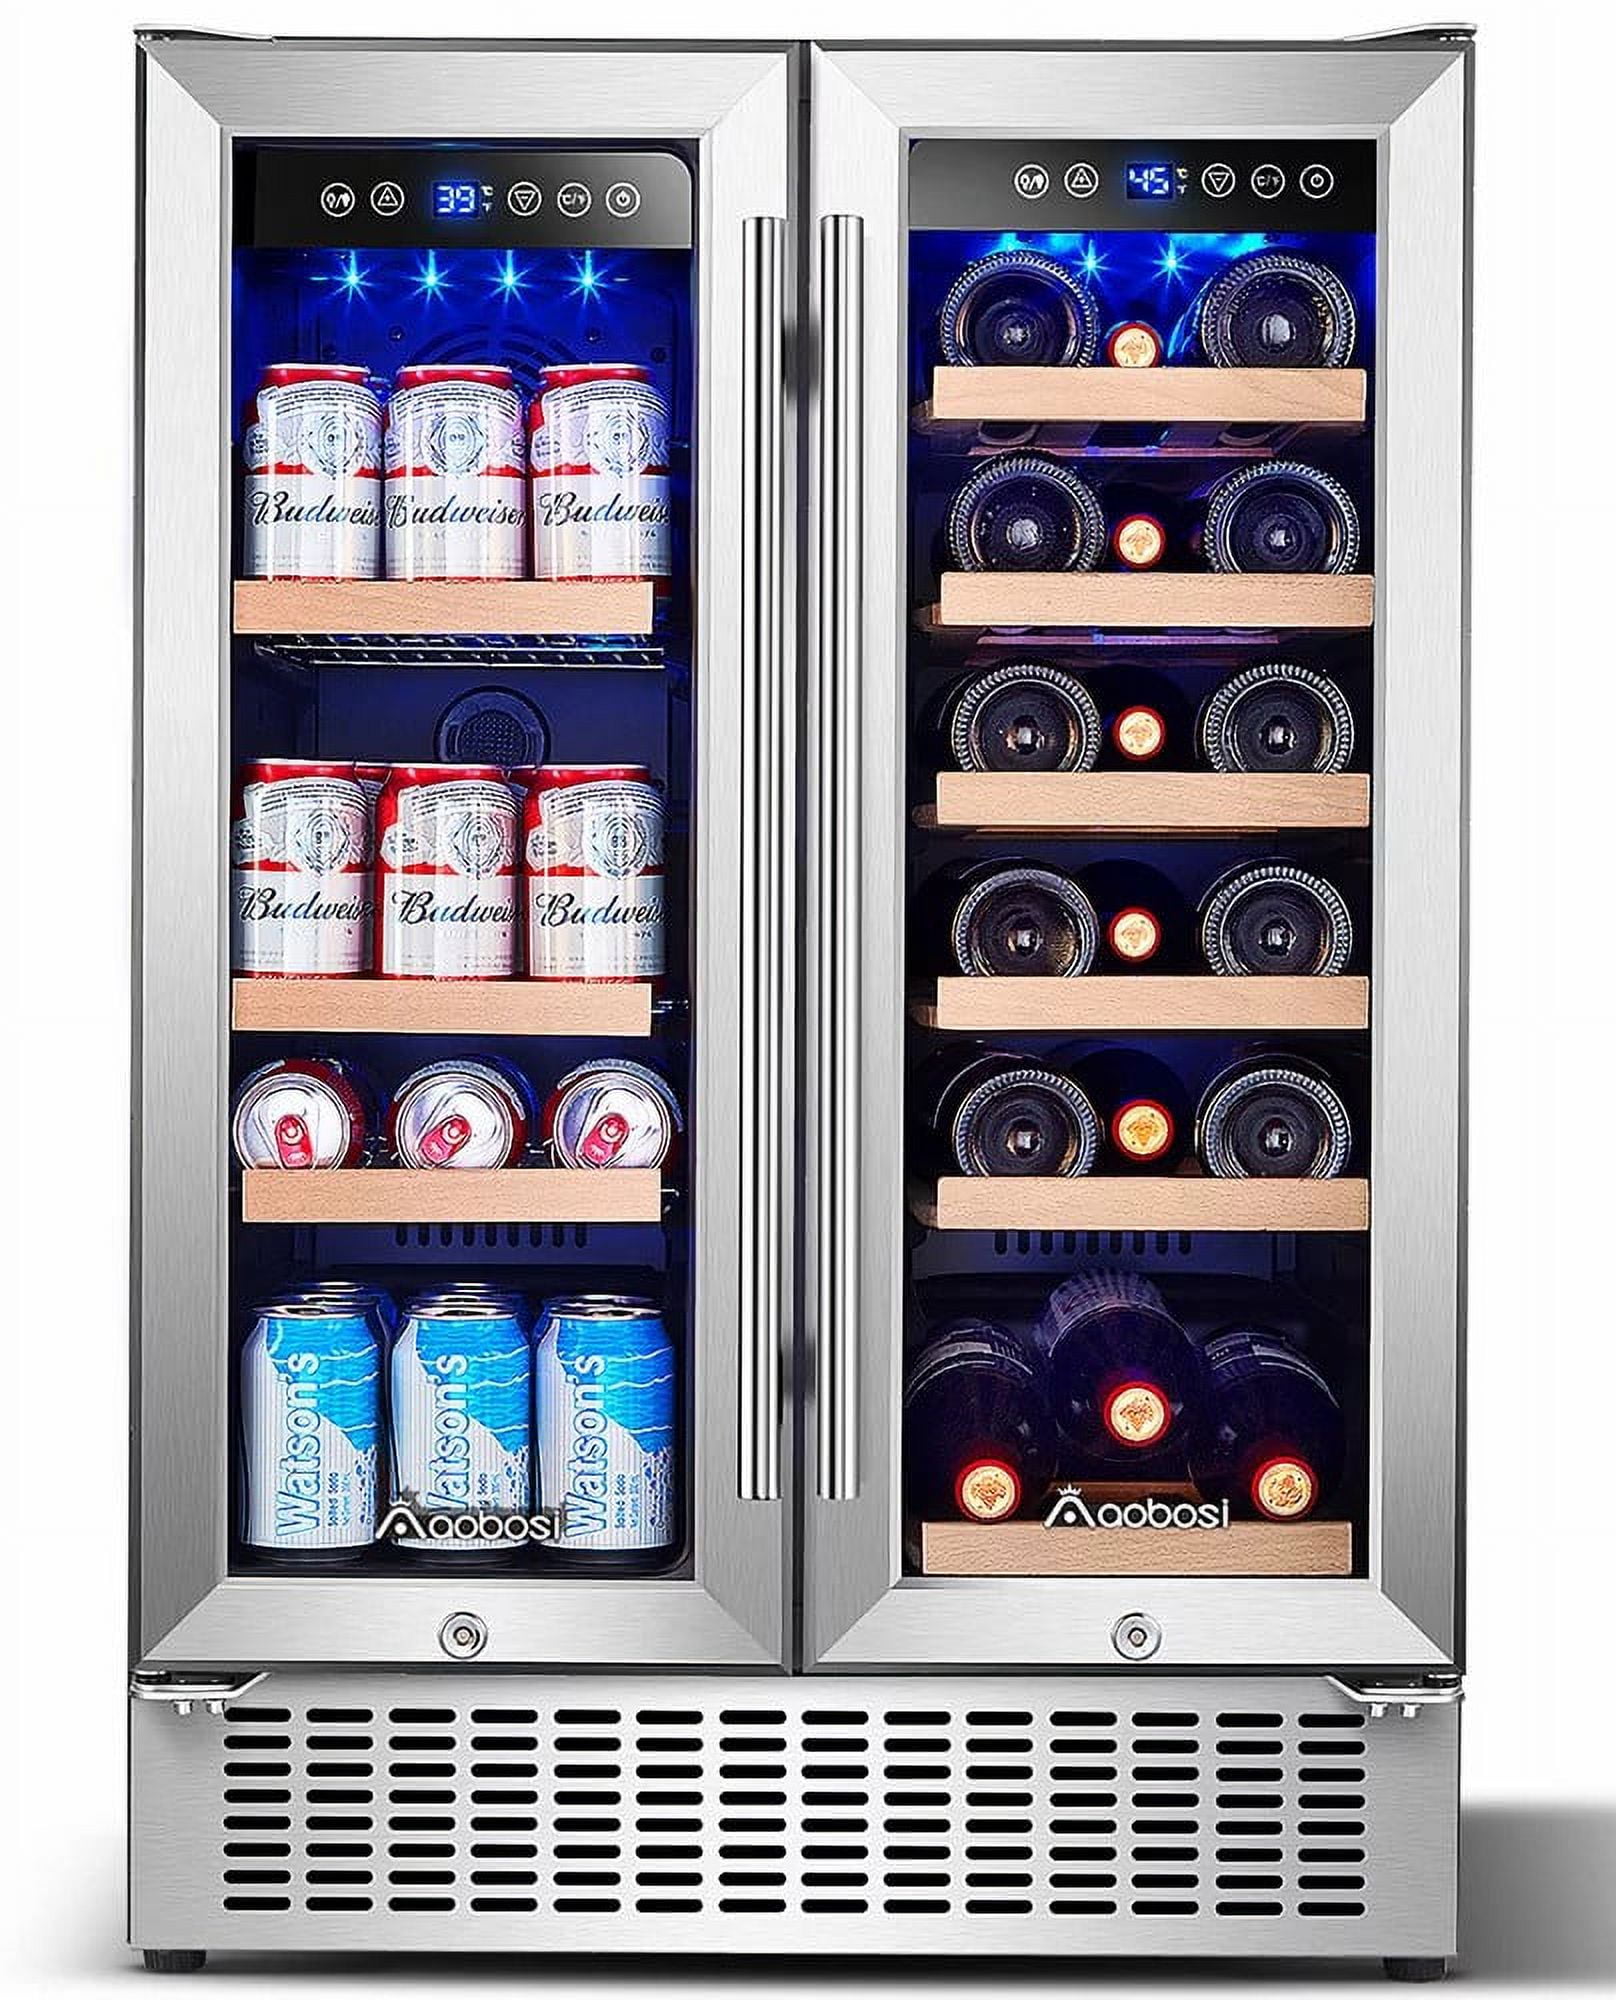 Edendirect 24 in. Beverage Refrigerator 18-Bottle Wine and 66-Can